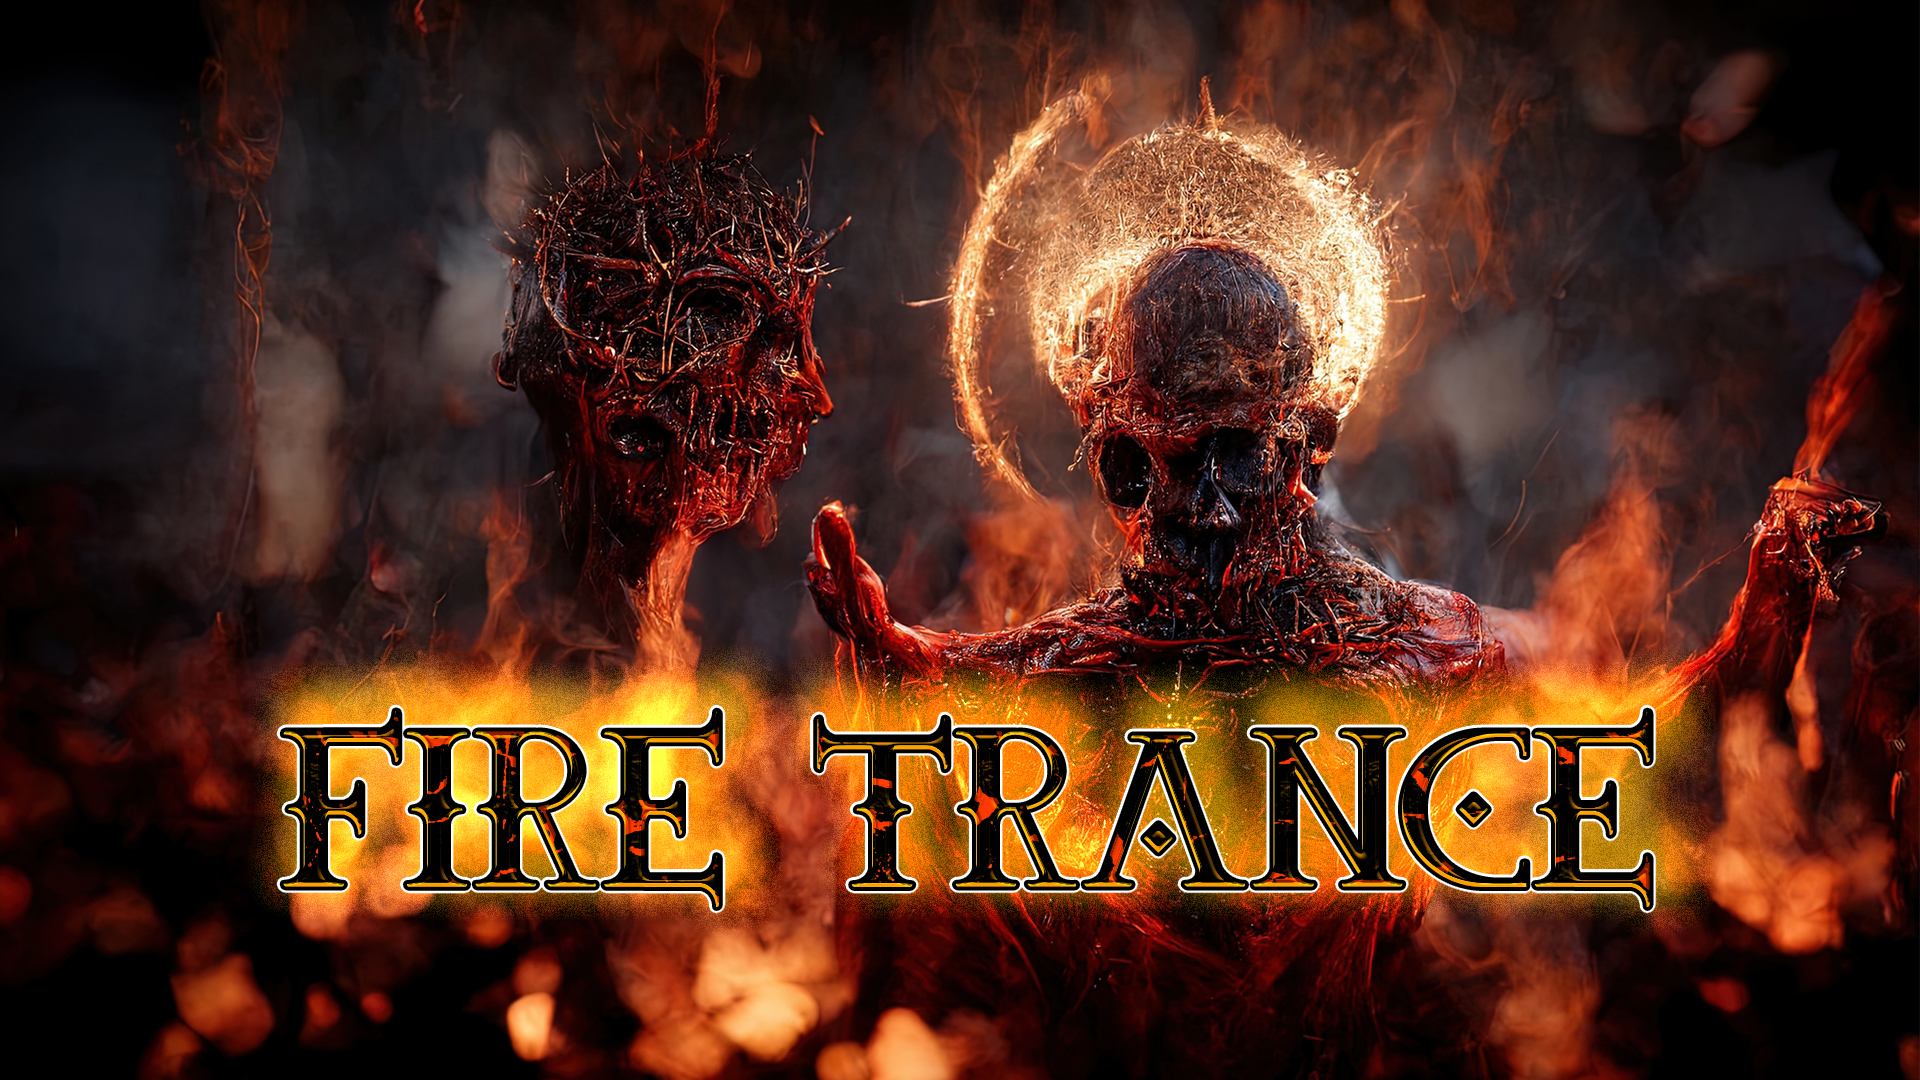 Dark Fantasy Music: Fire Trance